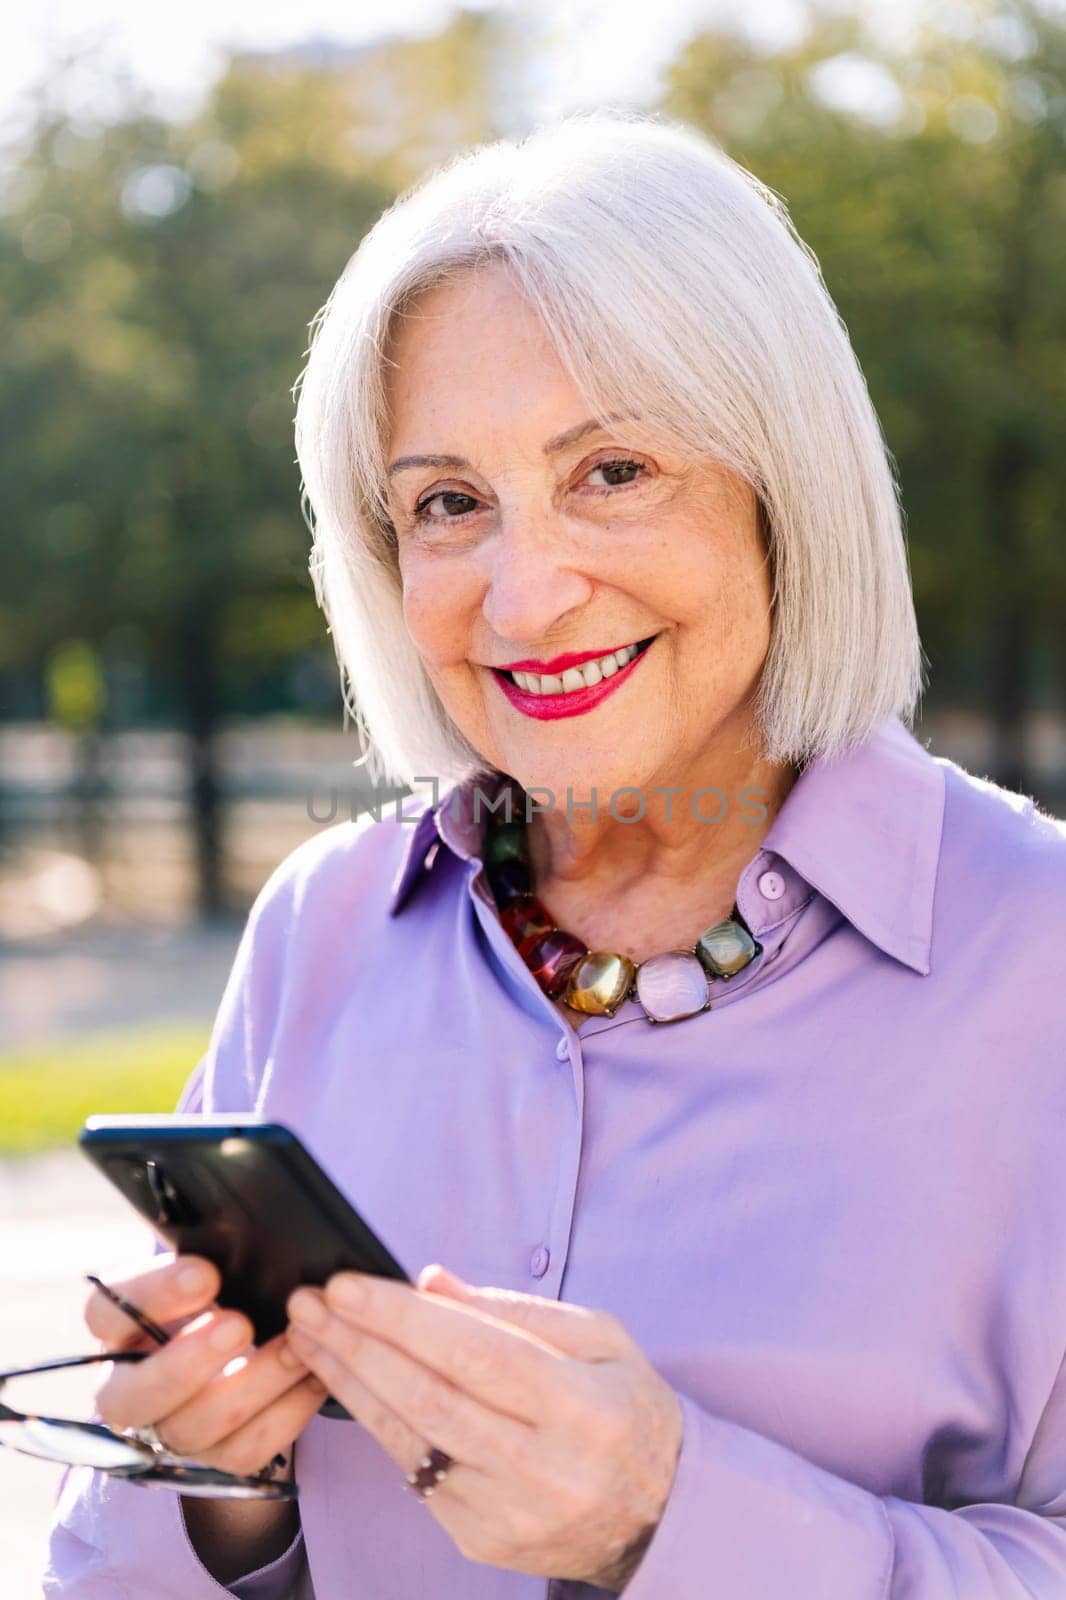 senior woman smiling happy using mobile phone by raulmelldo